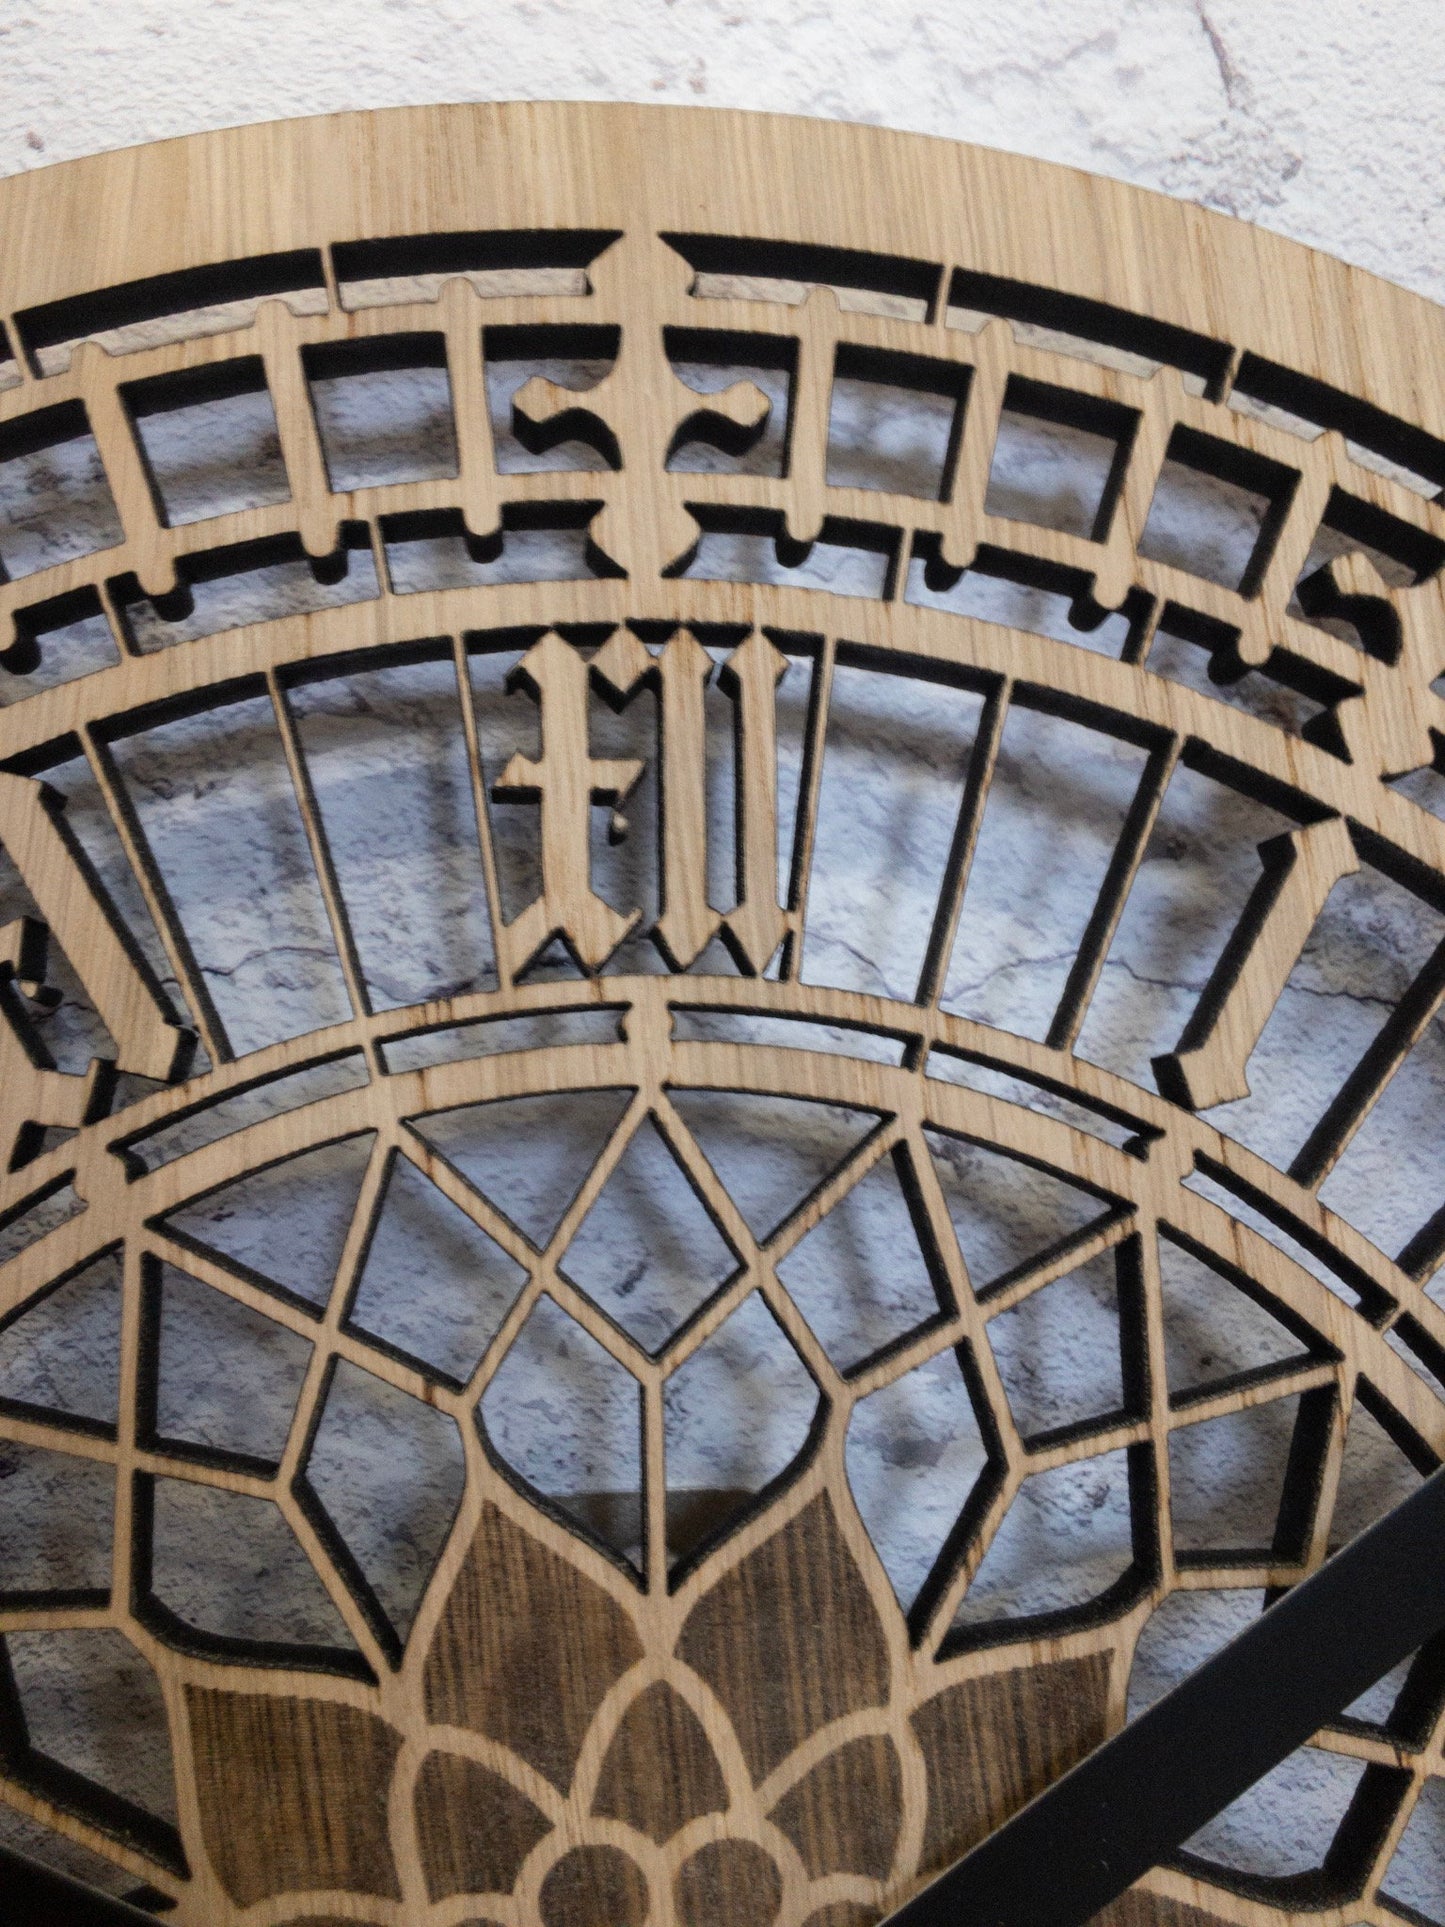 Big Ben Clock - real oak face - London Gift - large wall clock